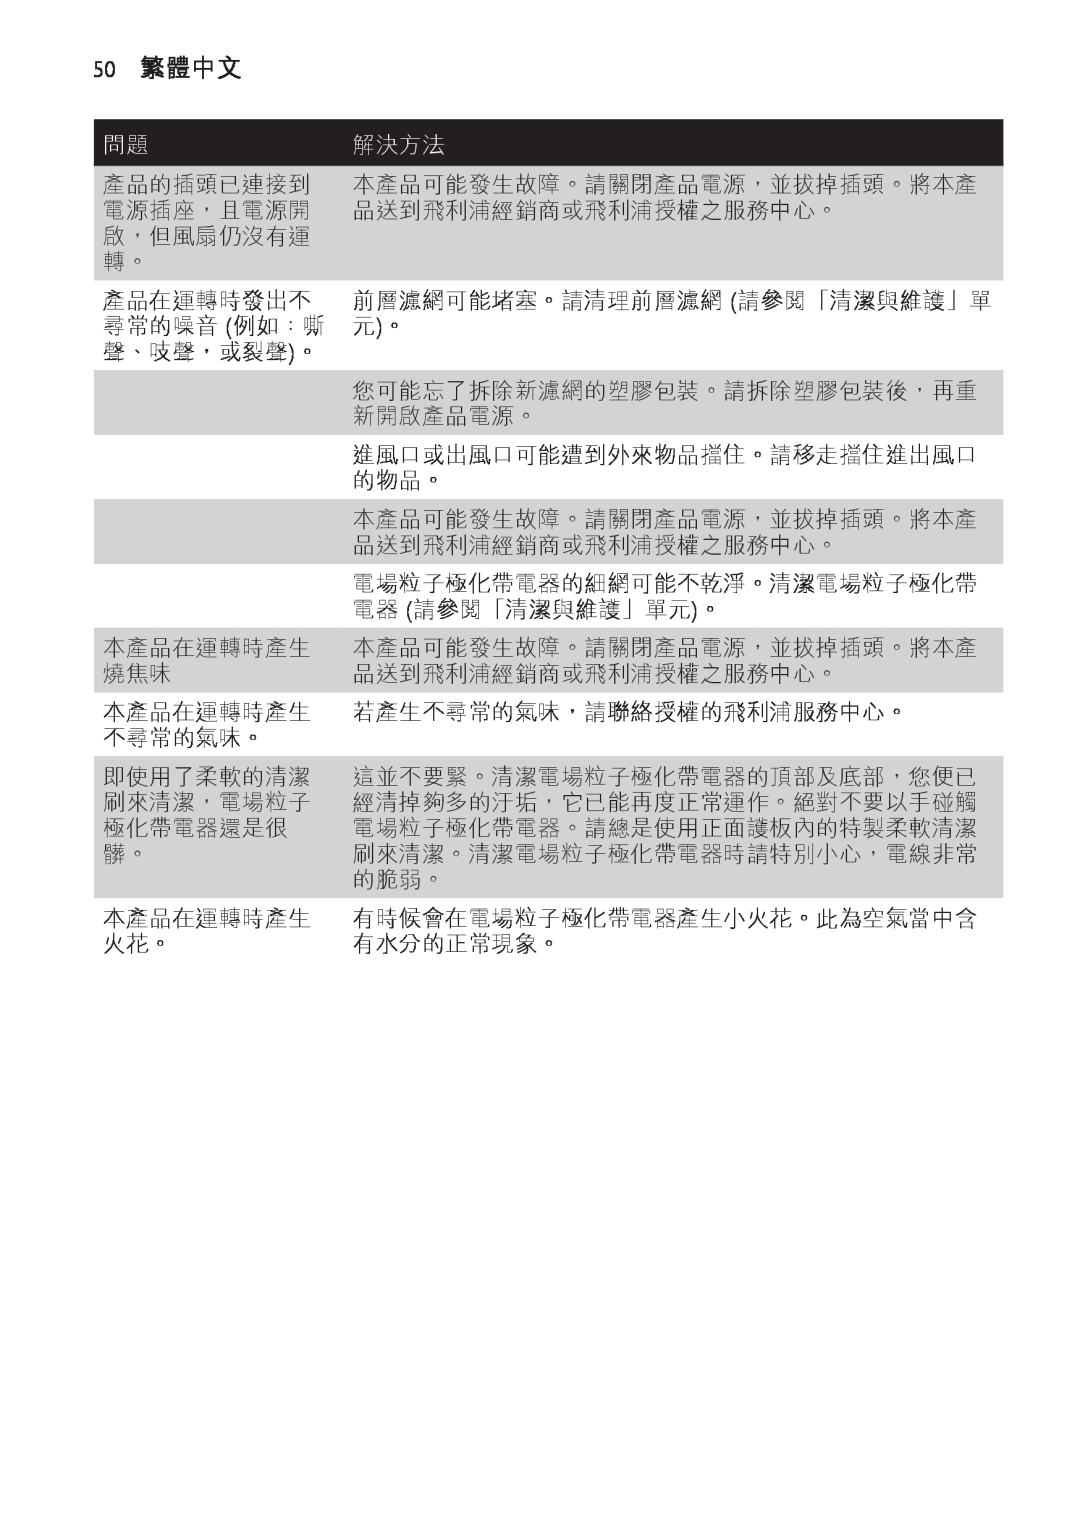 Philips AC4065, AC4055 manual 50繁體中文, 問題解決方法 